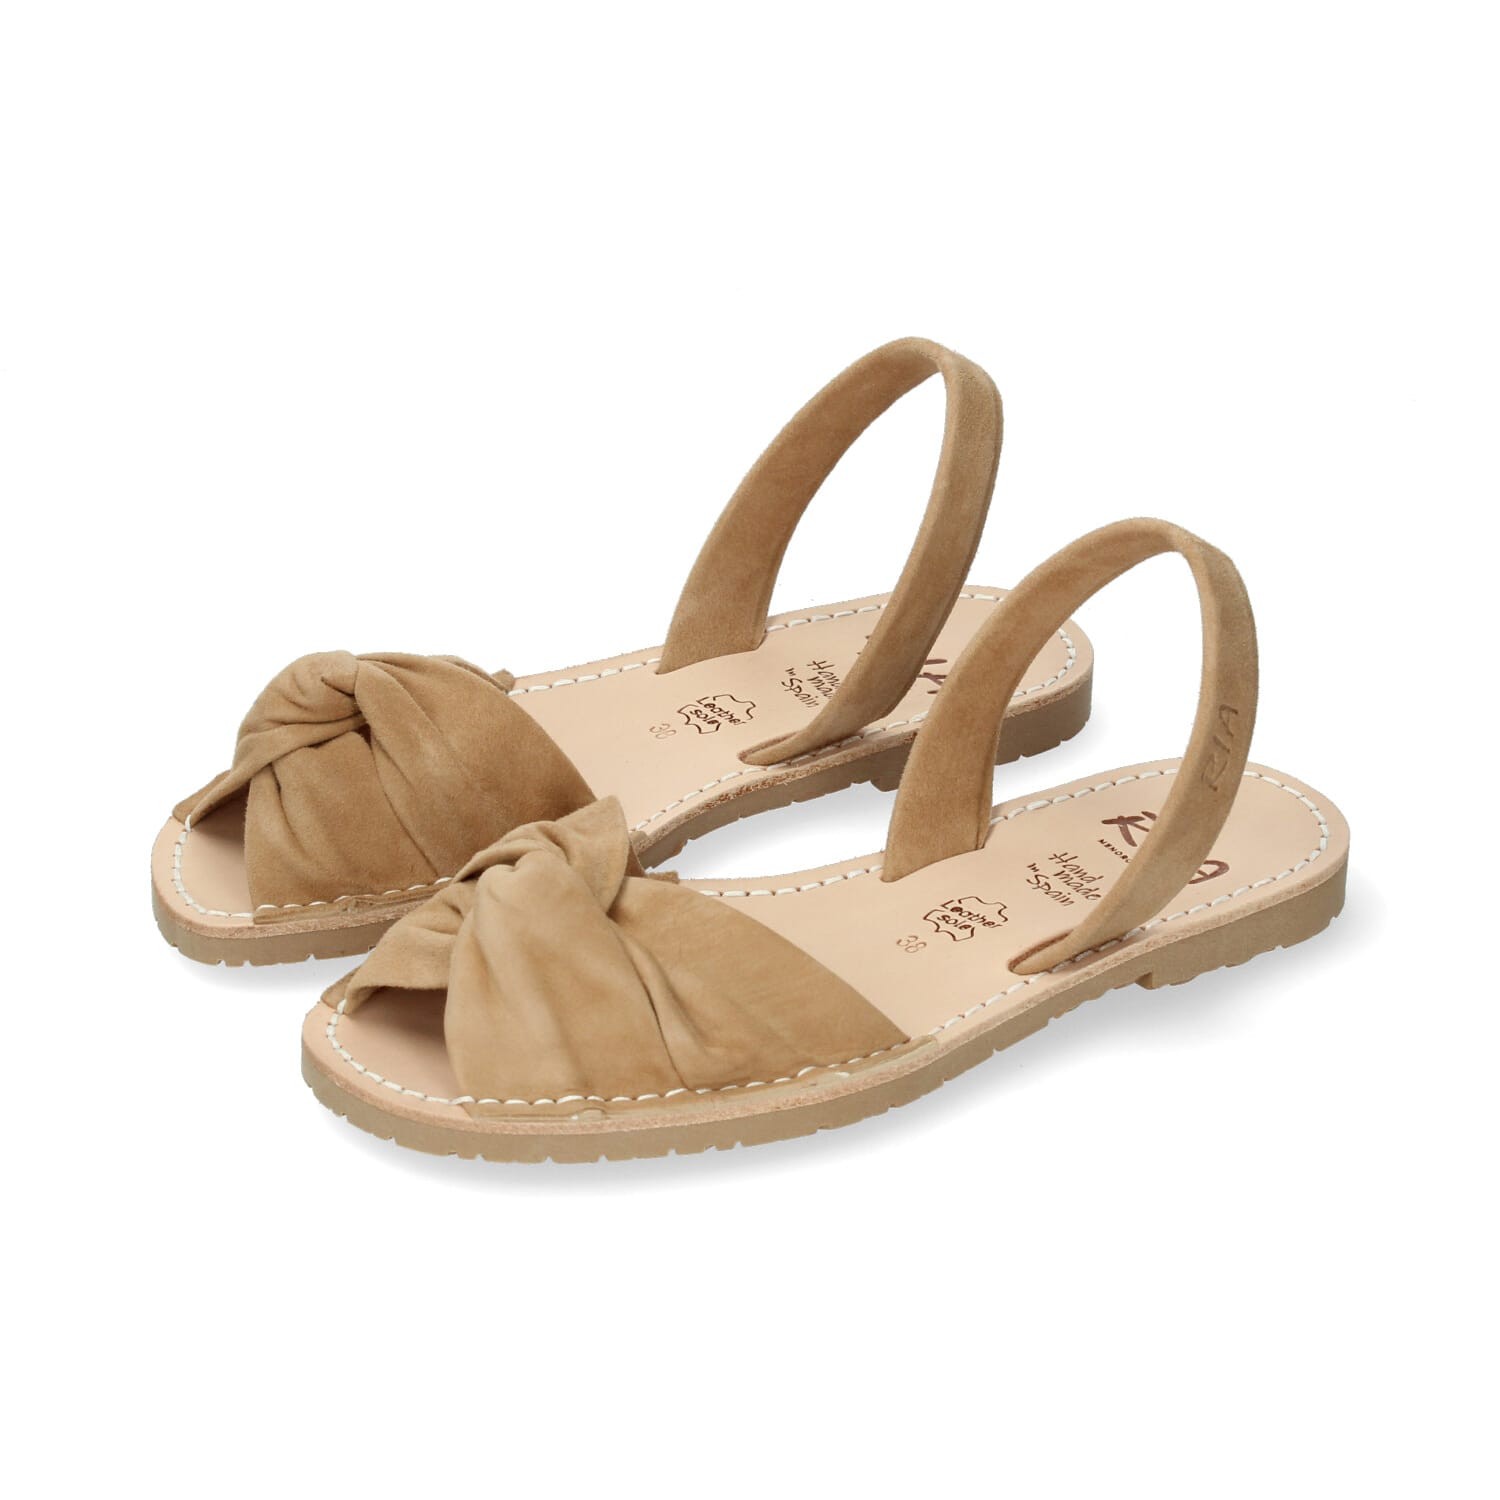 Ria 'Formentera' avarcas sandals in brown suede